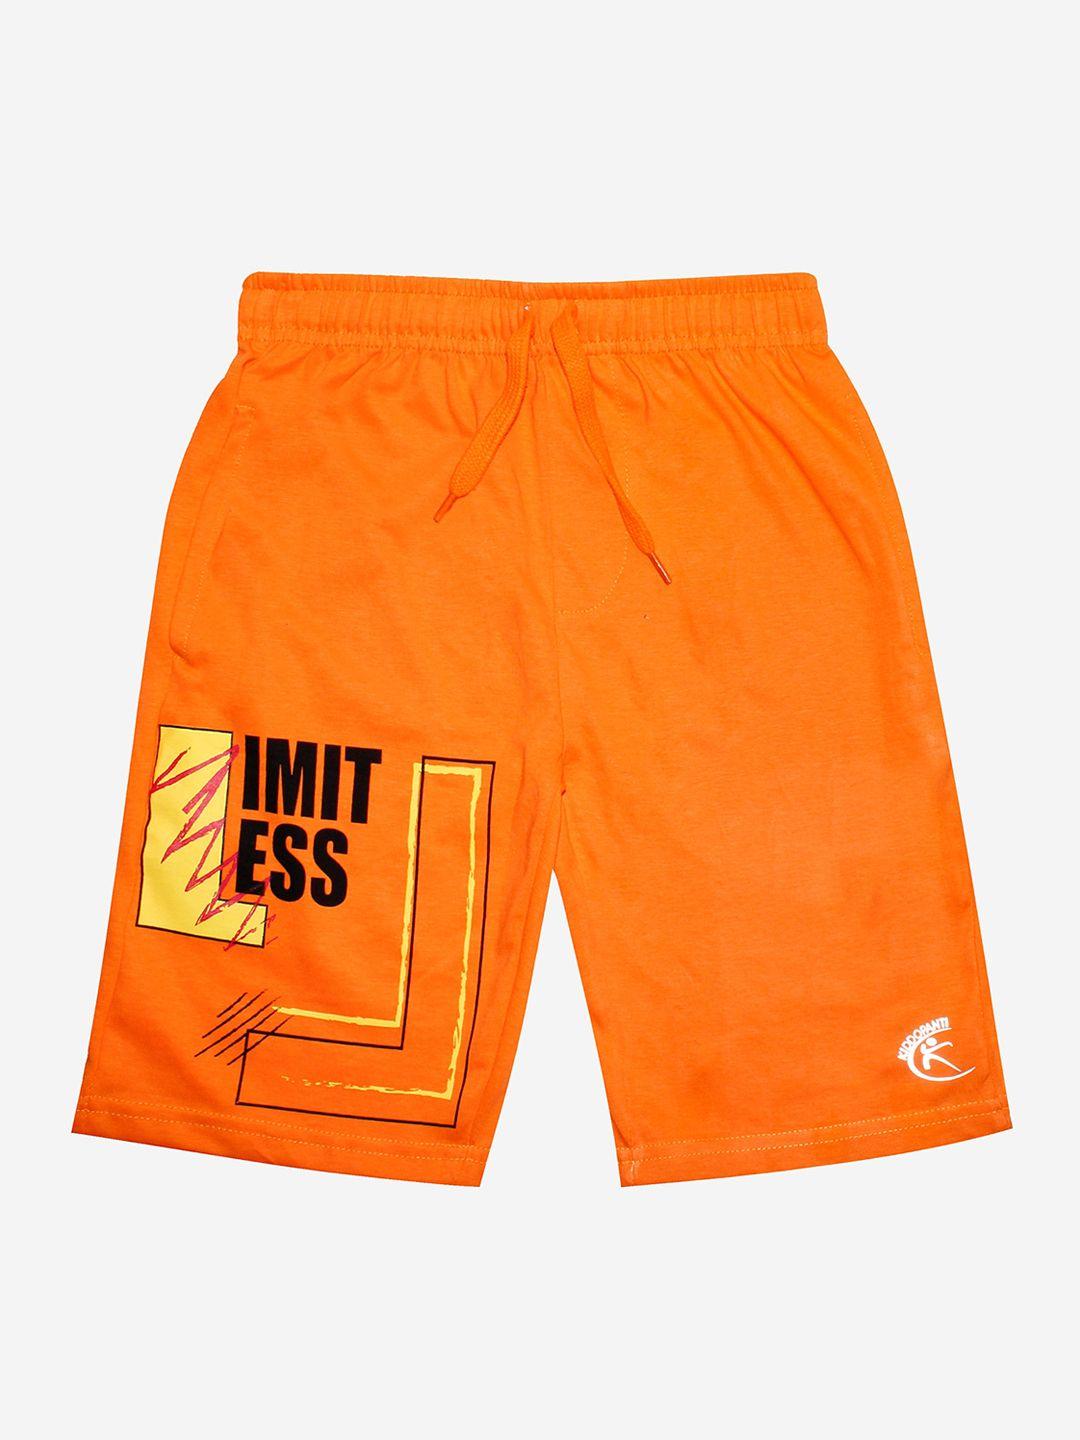 kiddopanti boys orange limitless printed pure cotton sports shorts